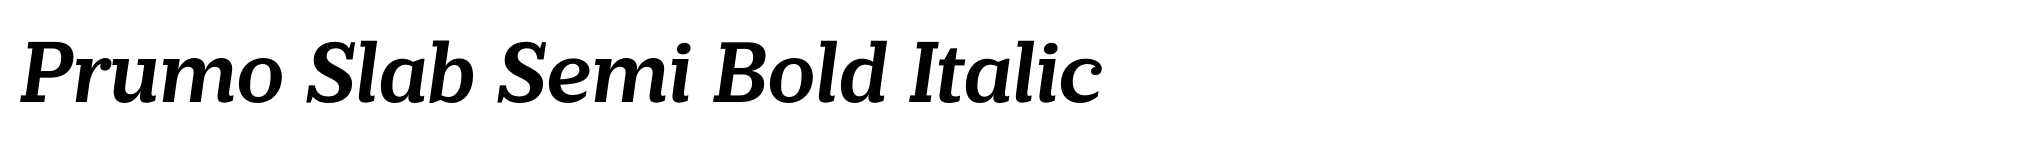 Prumo Slab Semi Bold Italic image